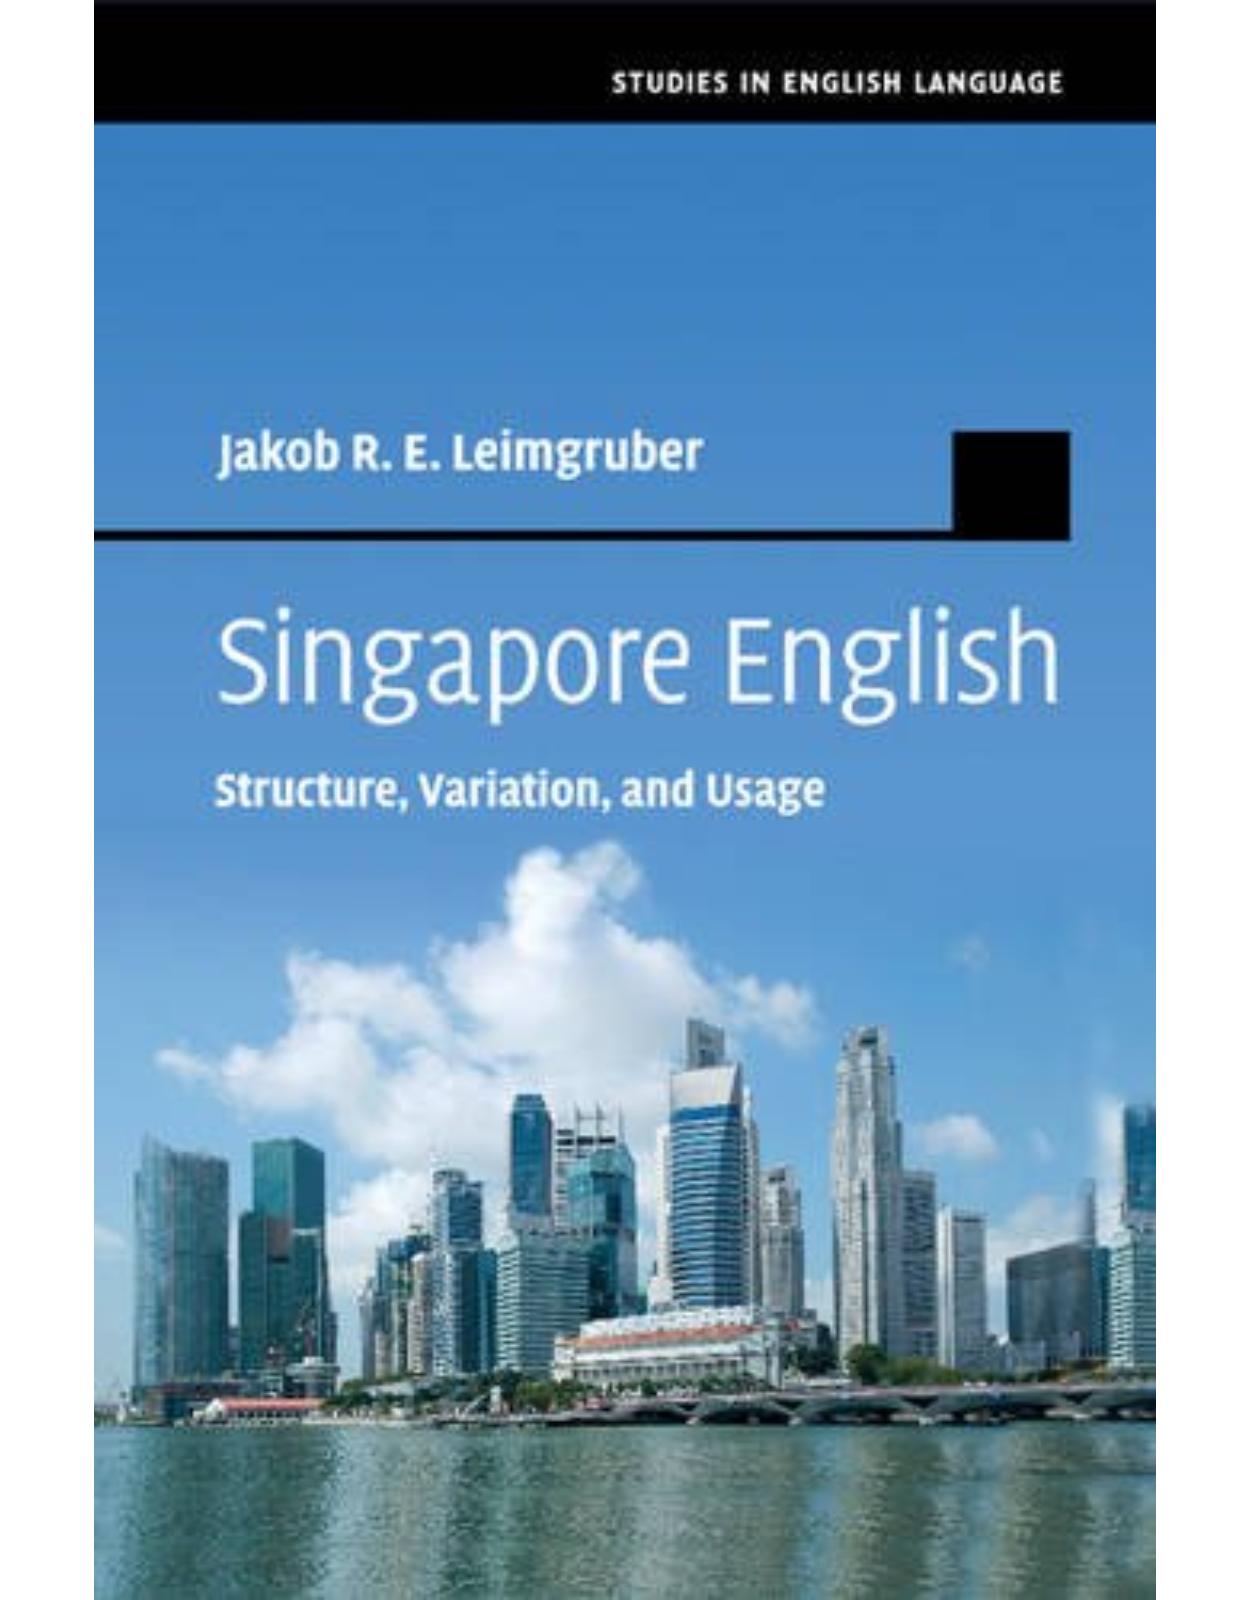 Singapore English: Structure, Variation, and Usage (Studies in English Language)